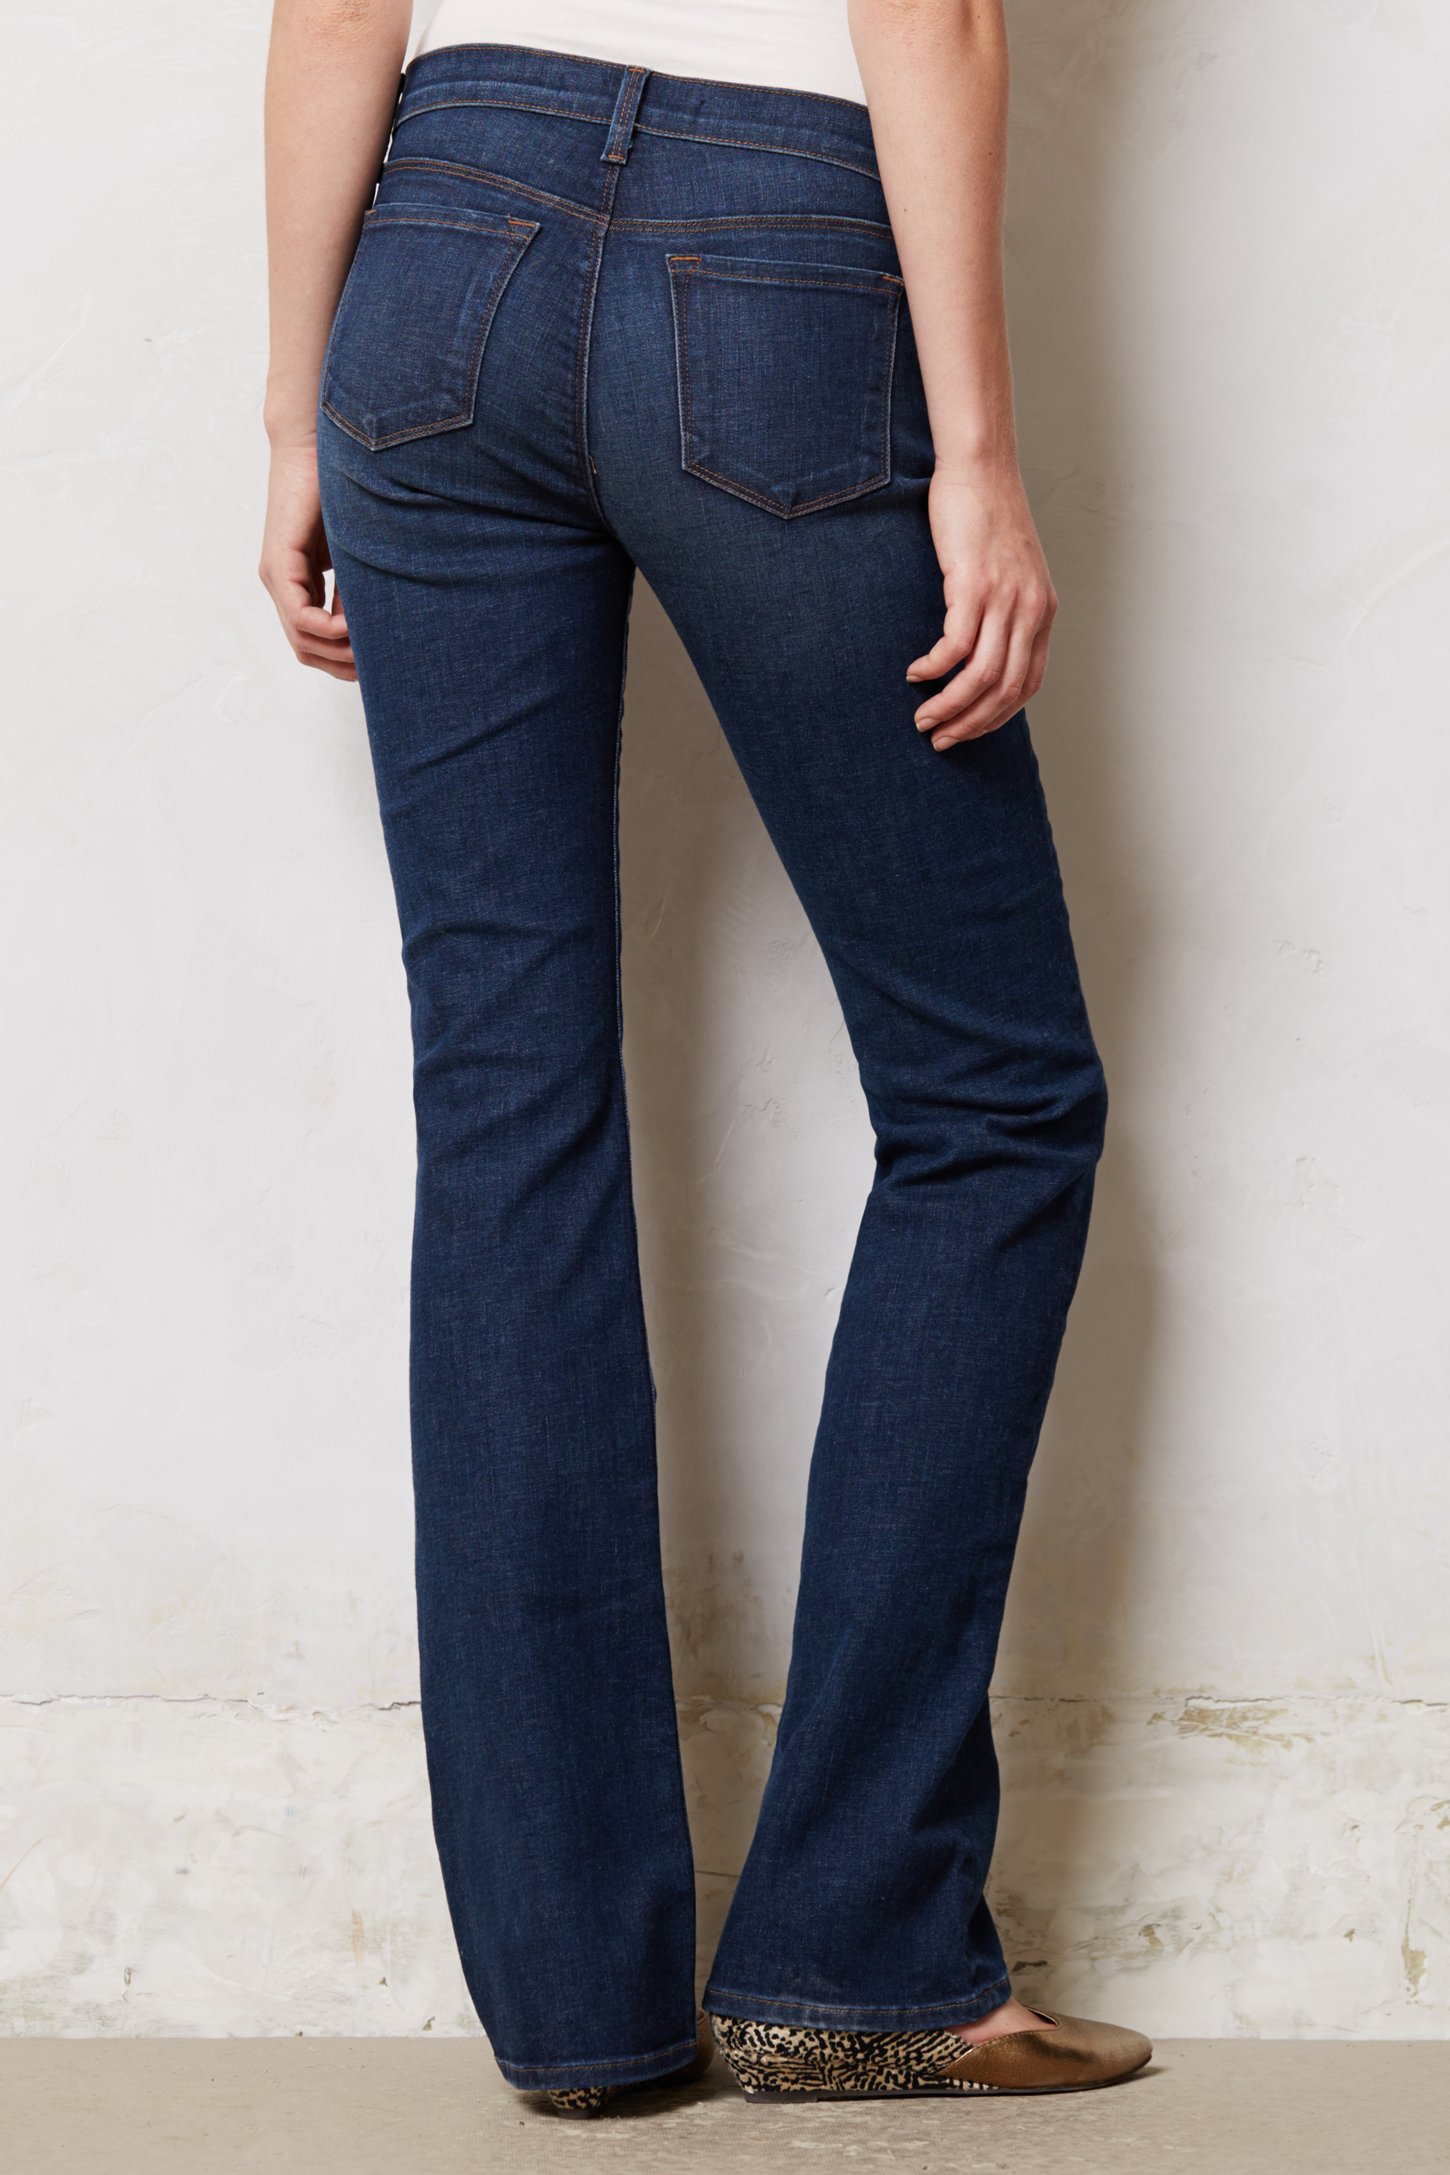 Lyst - J brand Brooke Slim Bootcut Jeans in Blue